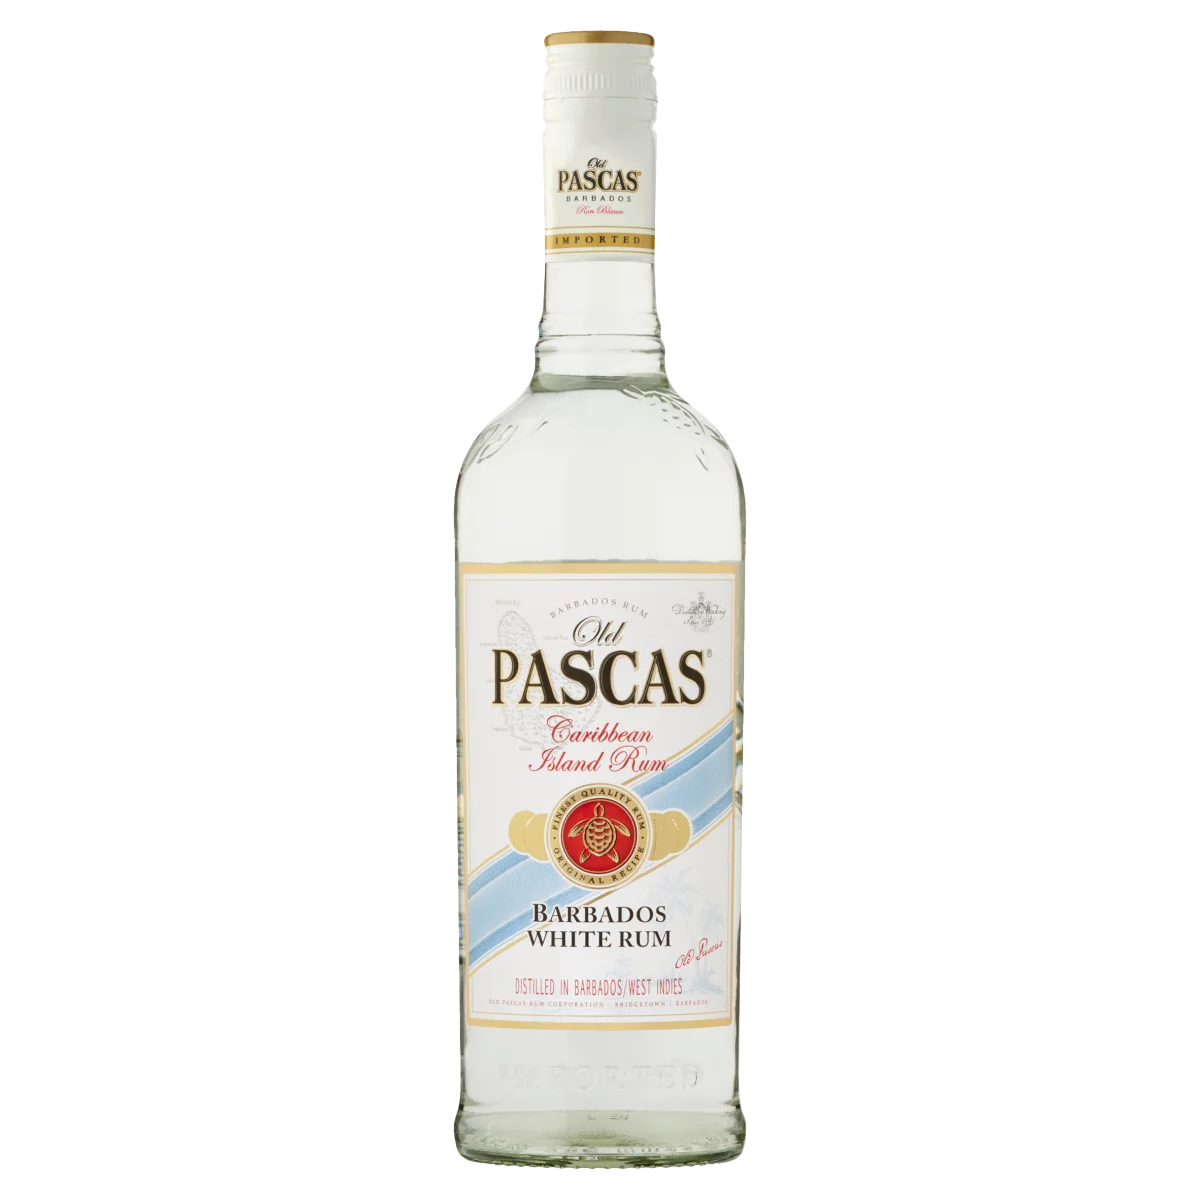 Old Pascas Barbados karibi fehér rum 37,5% 0,7 l